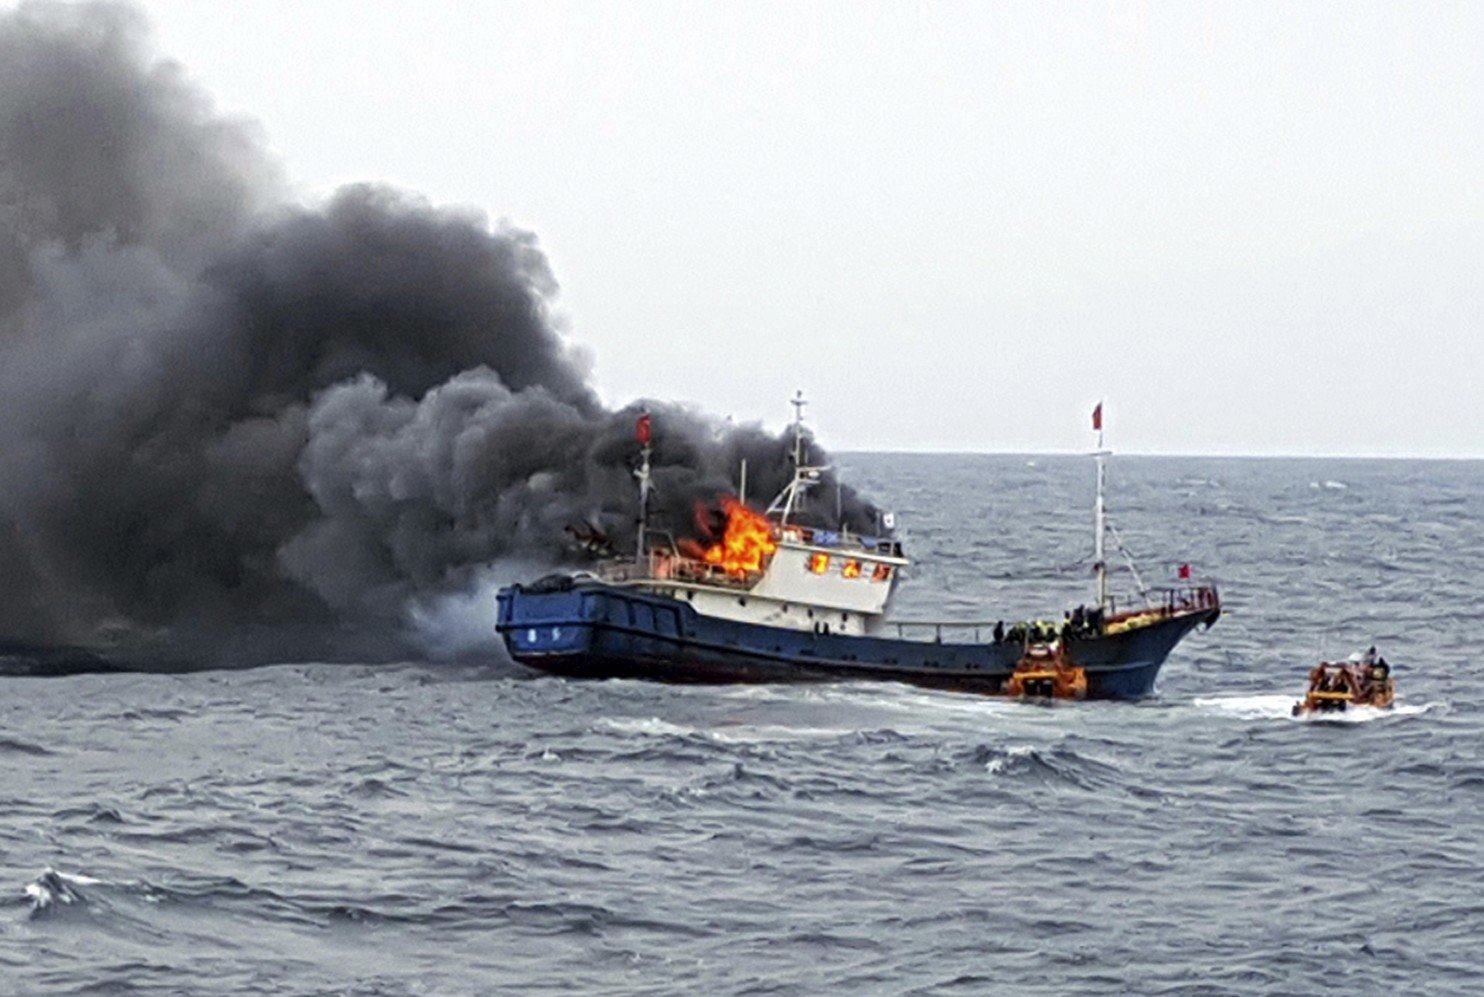 South Korea’s coast guard said three Chinese fishermen found dead